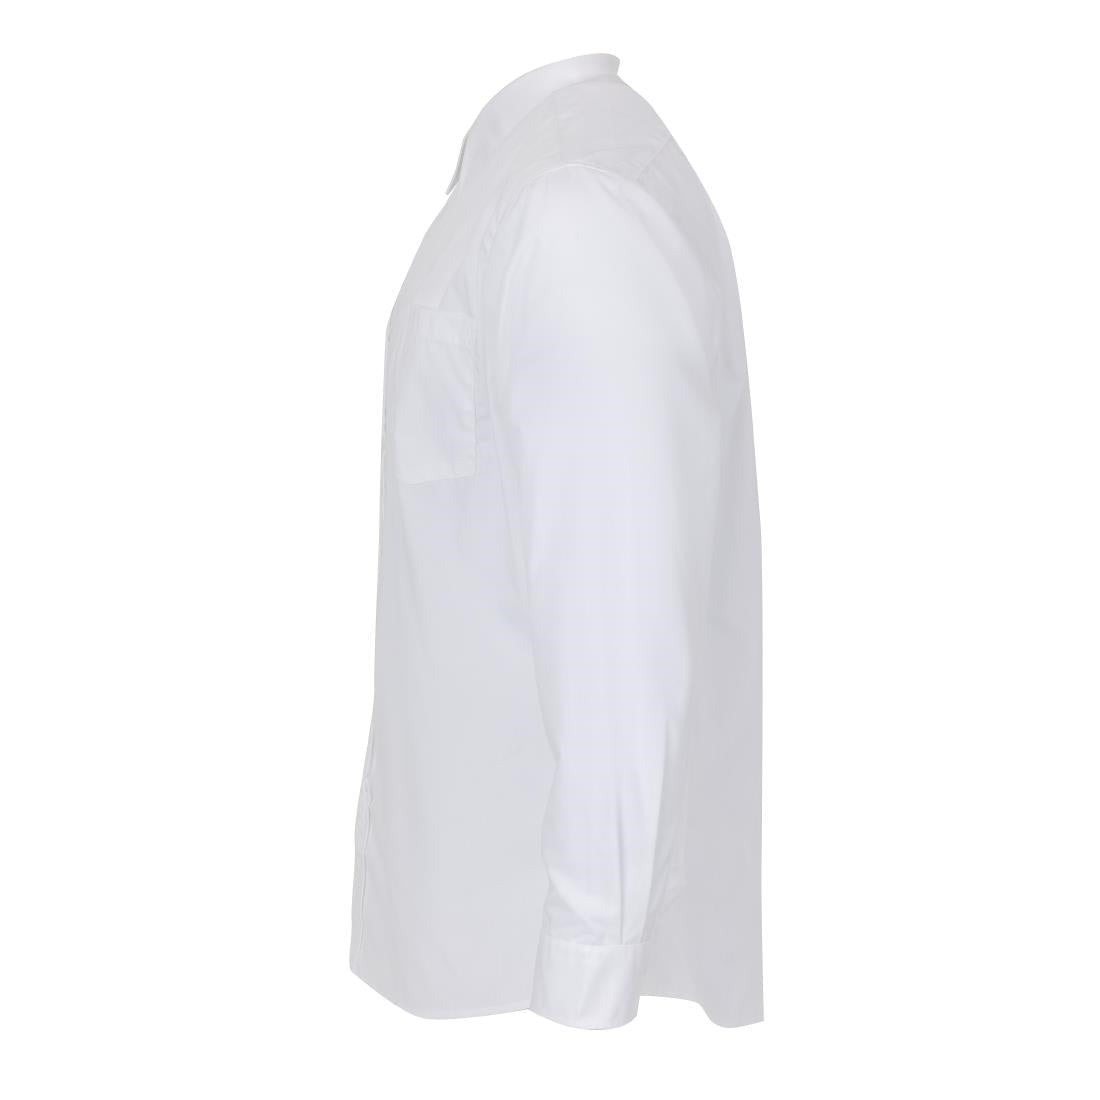 A730-3XL Uniform Works Long Sleeve Shirt White Size 3XL JD Catering Equipment Solutions Ltd